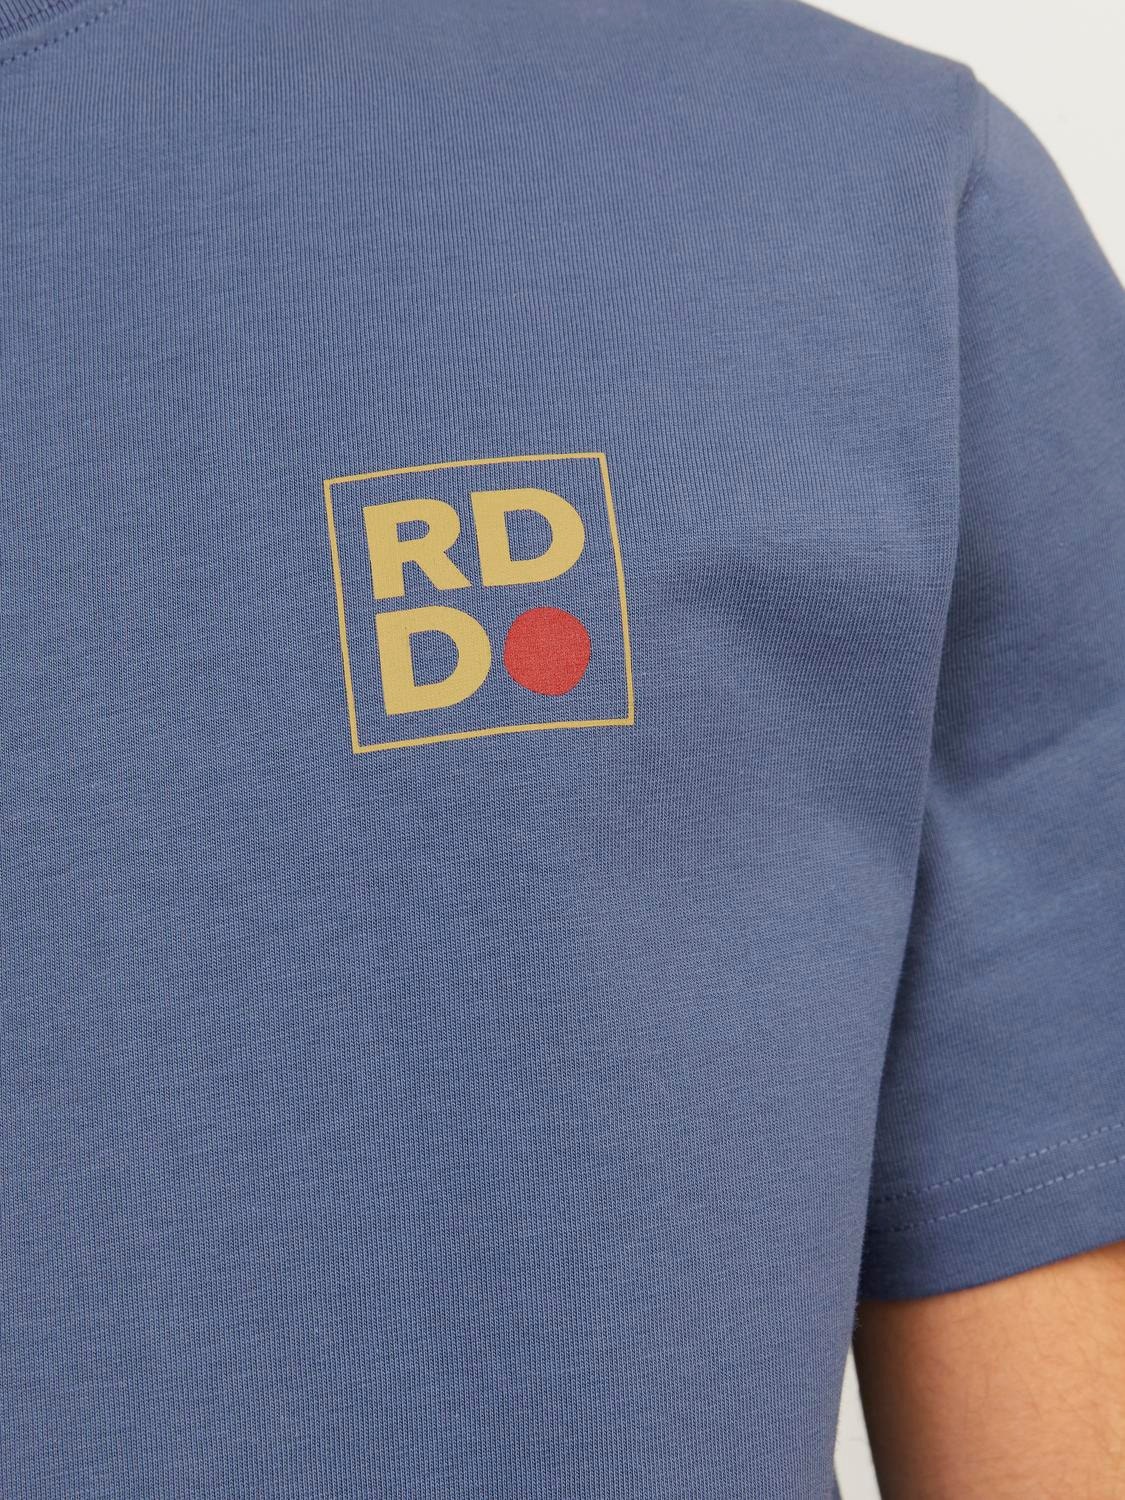 Jack & Jones RDD Camiseta Logotipo Cuello redondo -Vintage Indigo - 12247475